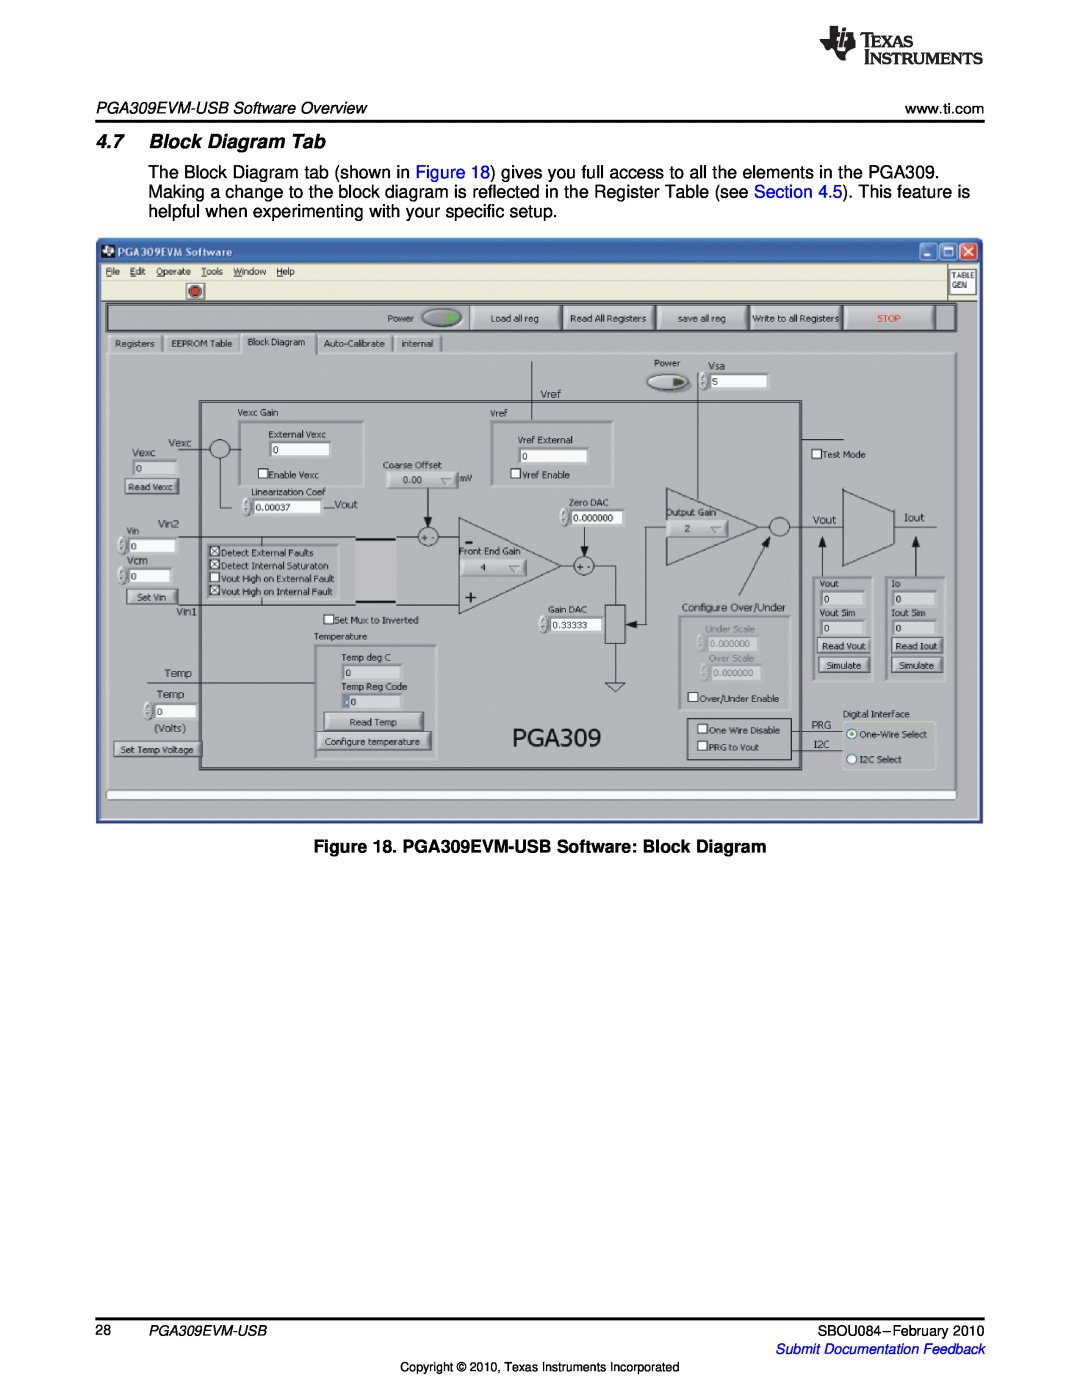 Texas Instruments manual Block Diagram Tab, PGA309EVM-USB Software Block Diagram 